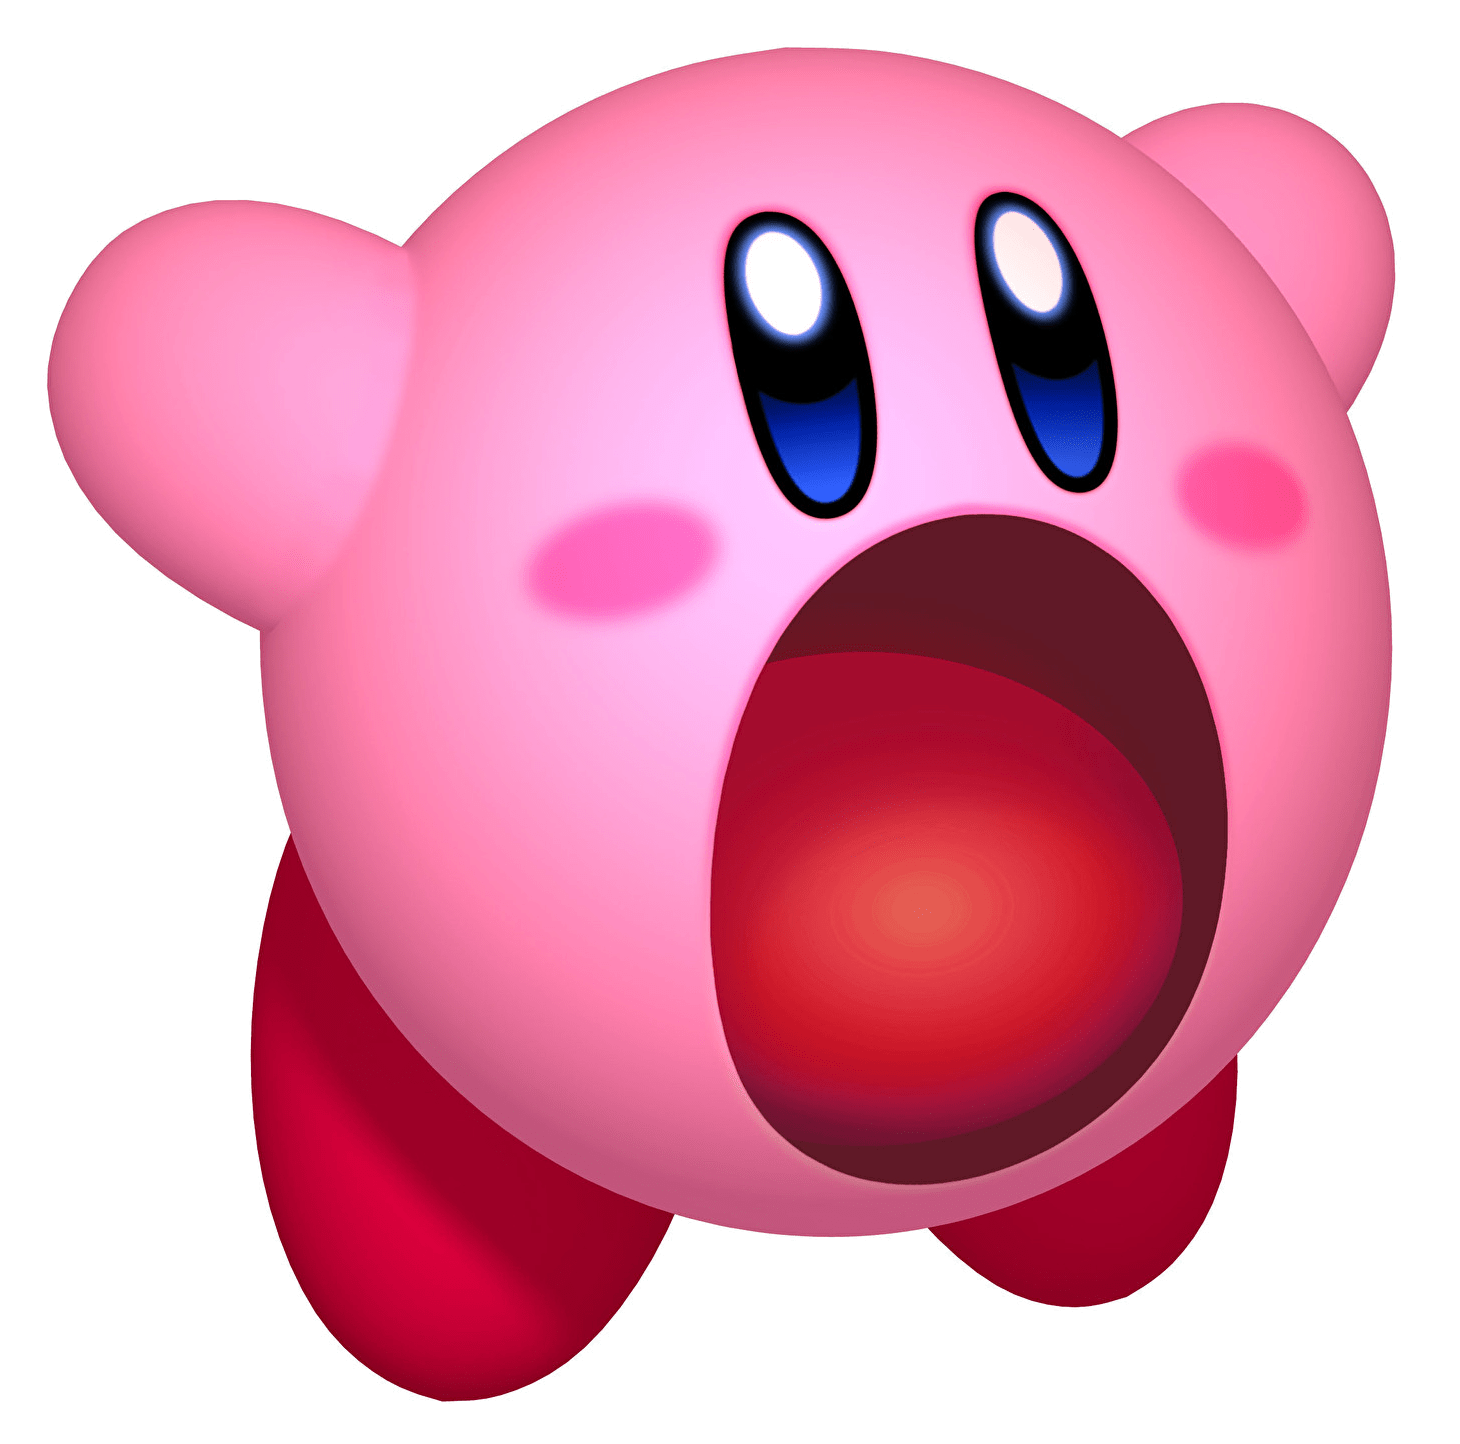 Kirby's mouth is open Blank Meme Template